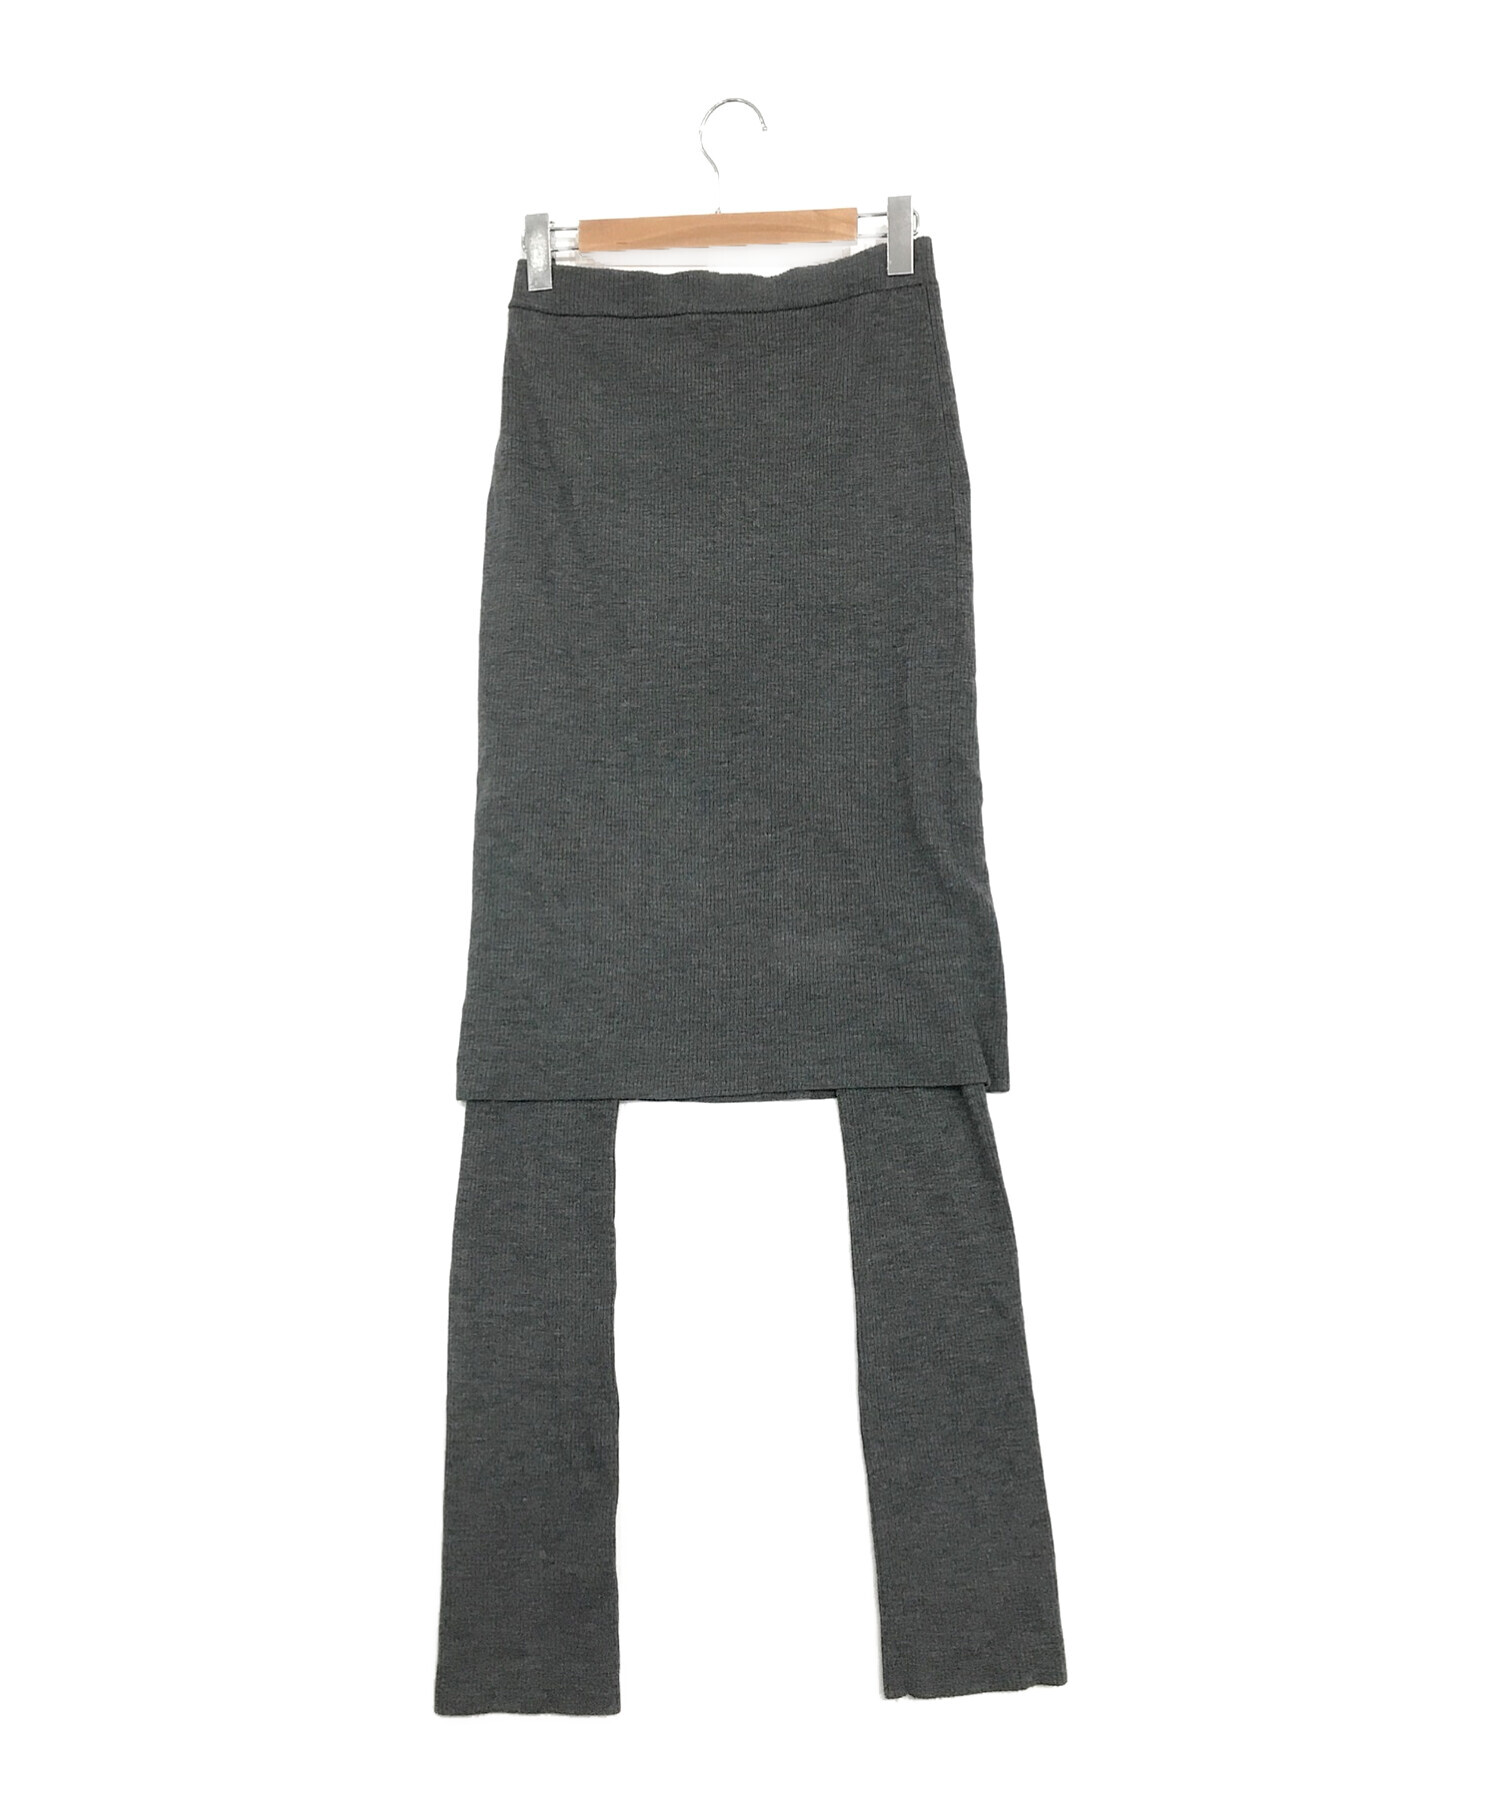 FRAMeWORK (フレームワーク) レギンス付きスカート グレー サイズ:SIZE 38